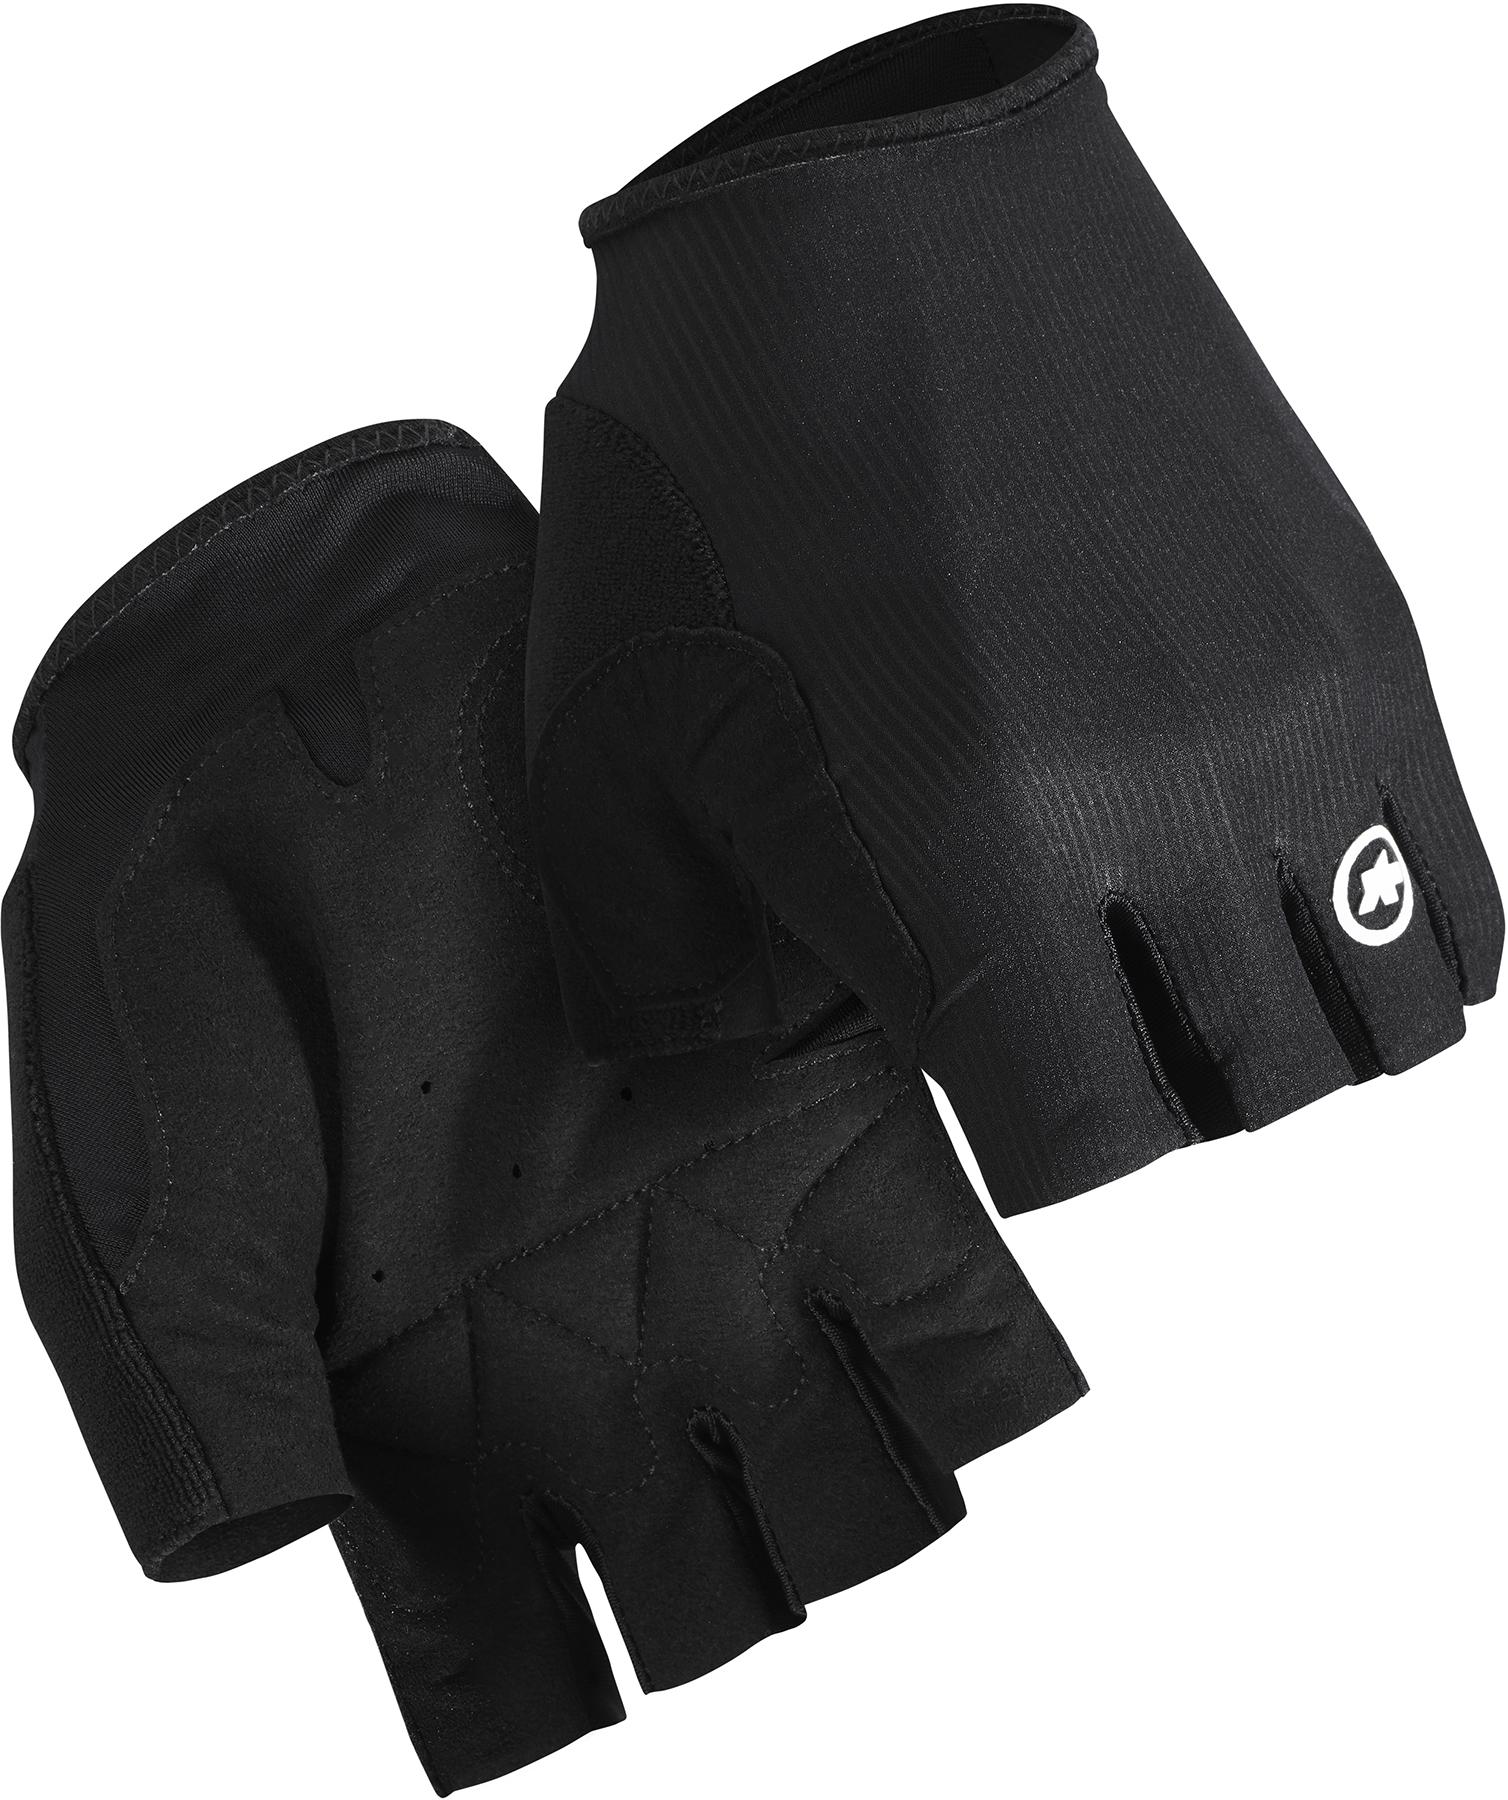 Assos Rs Gloves Targa - Black Series